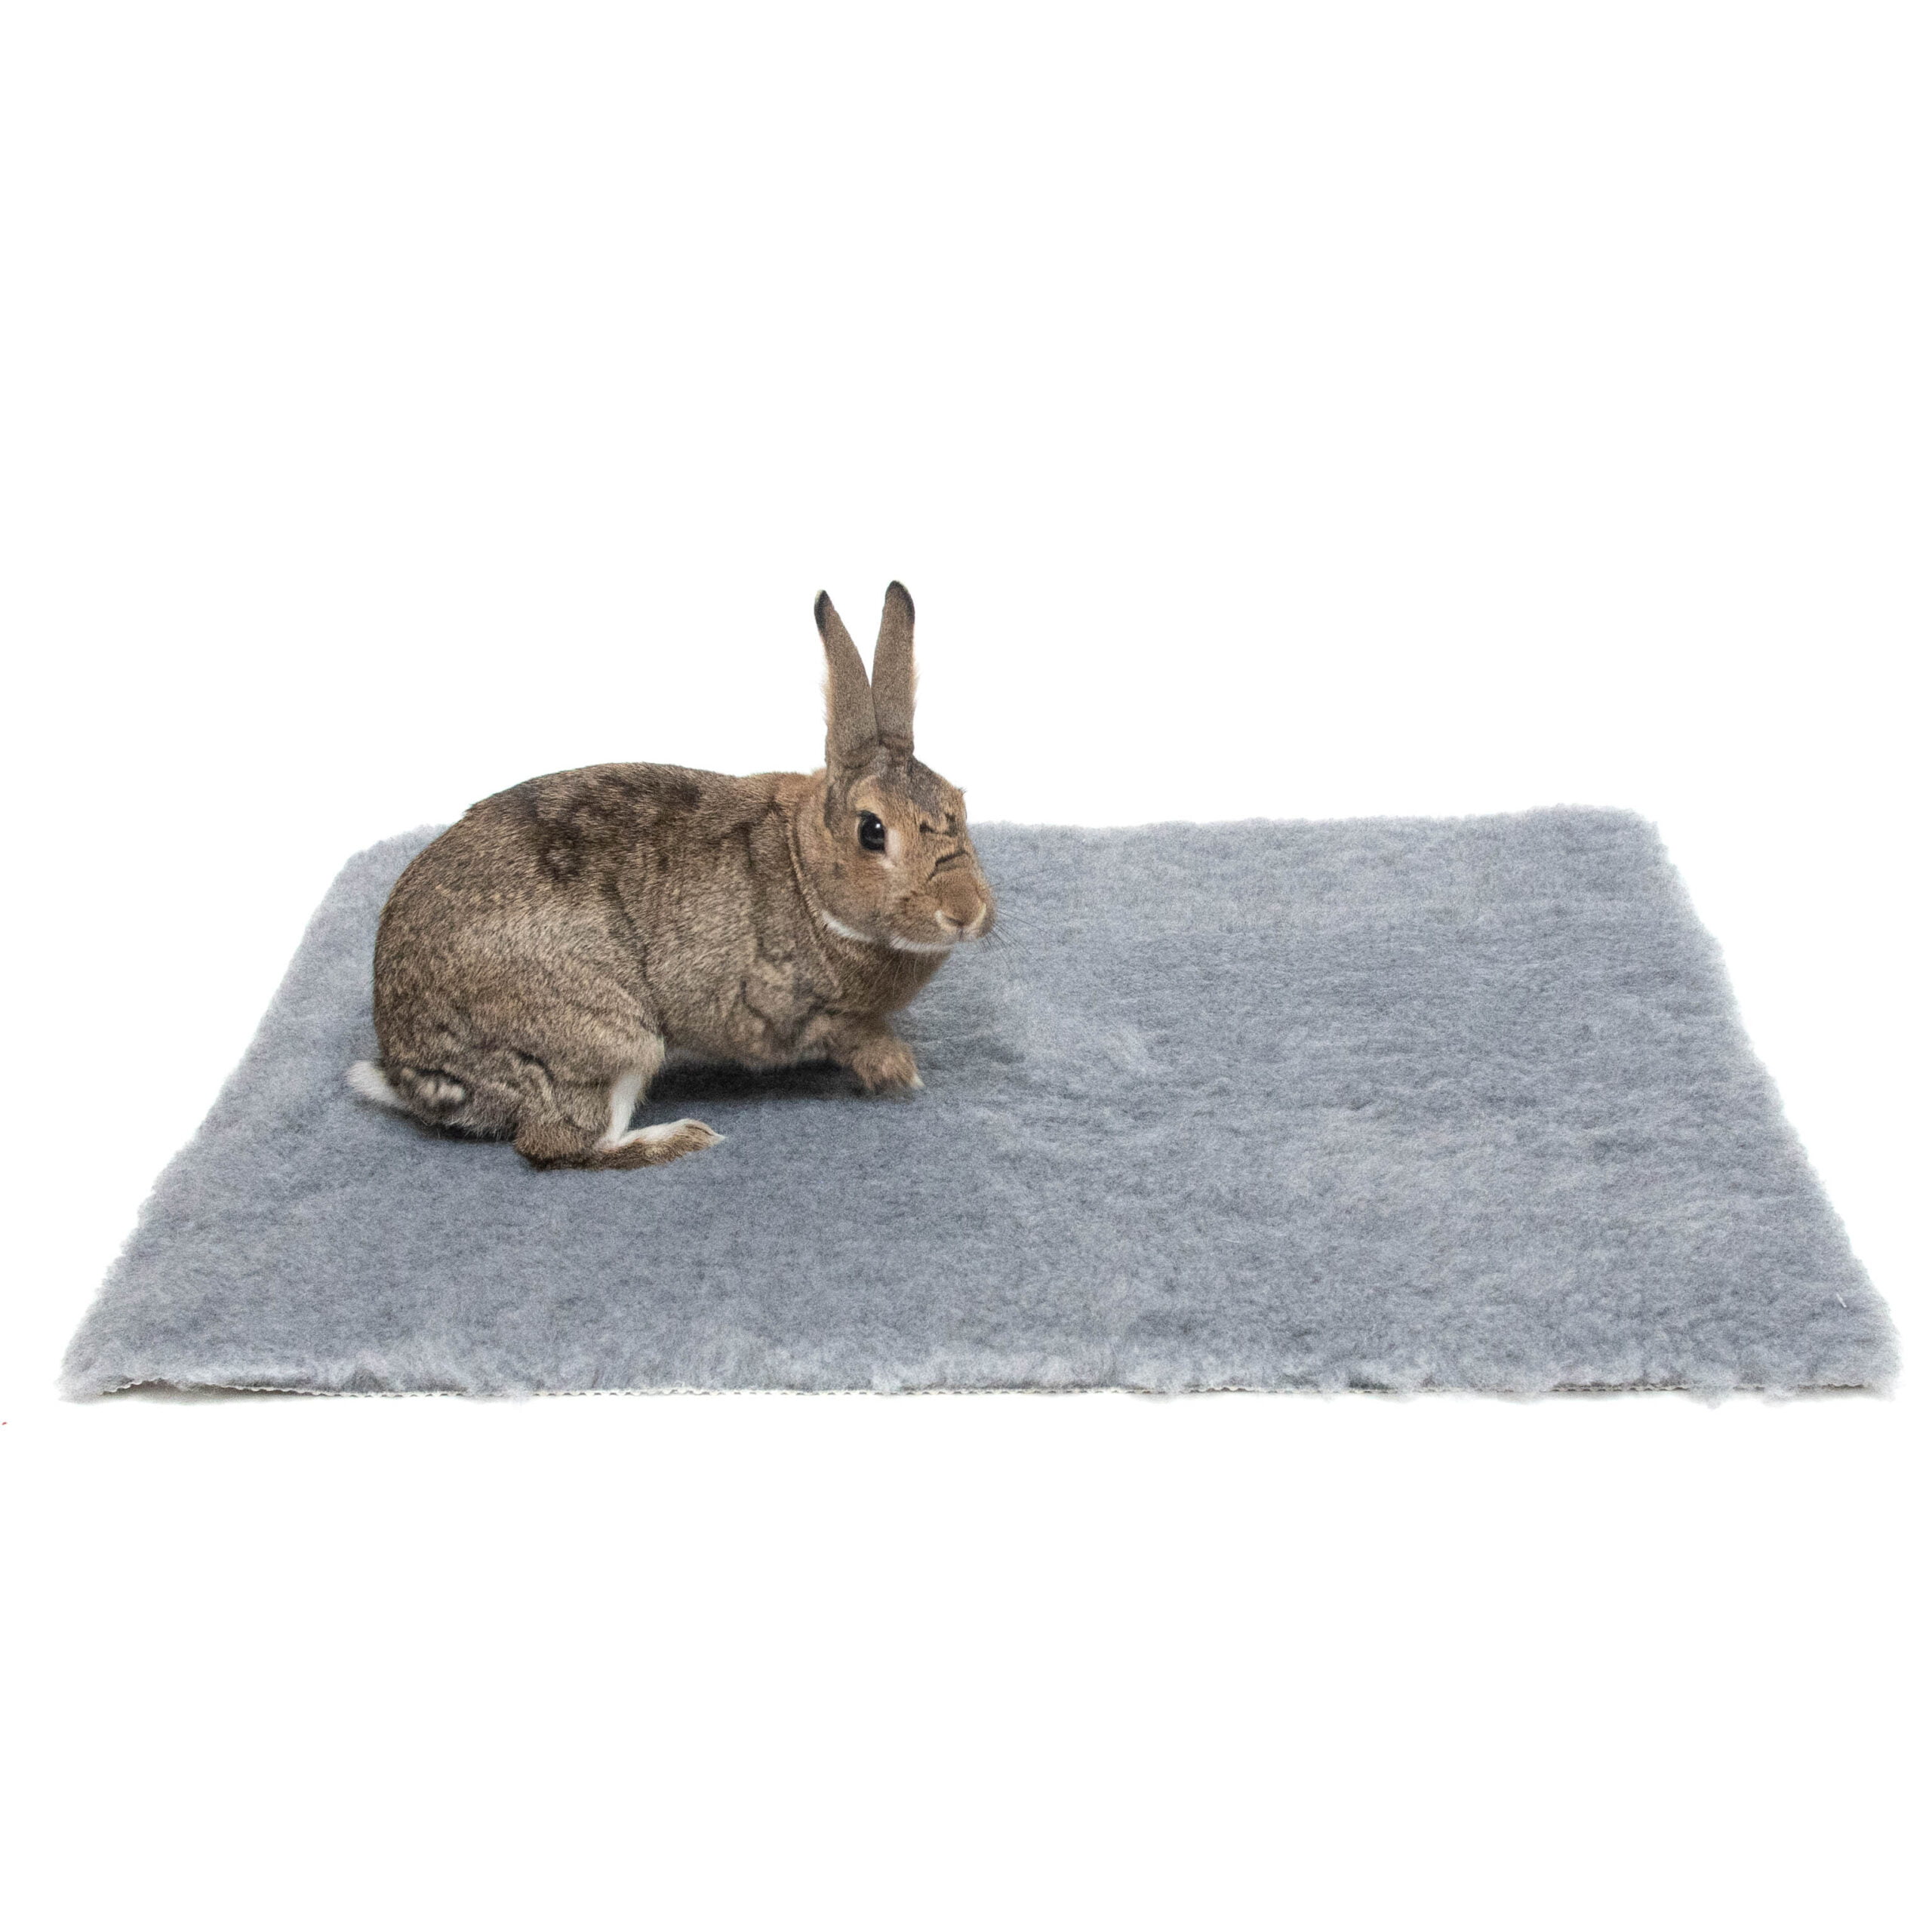 Washable absorbent mat - Rabbits World